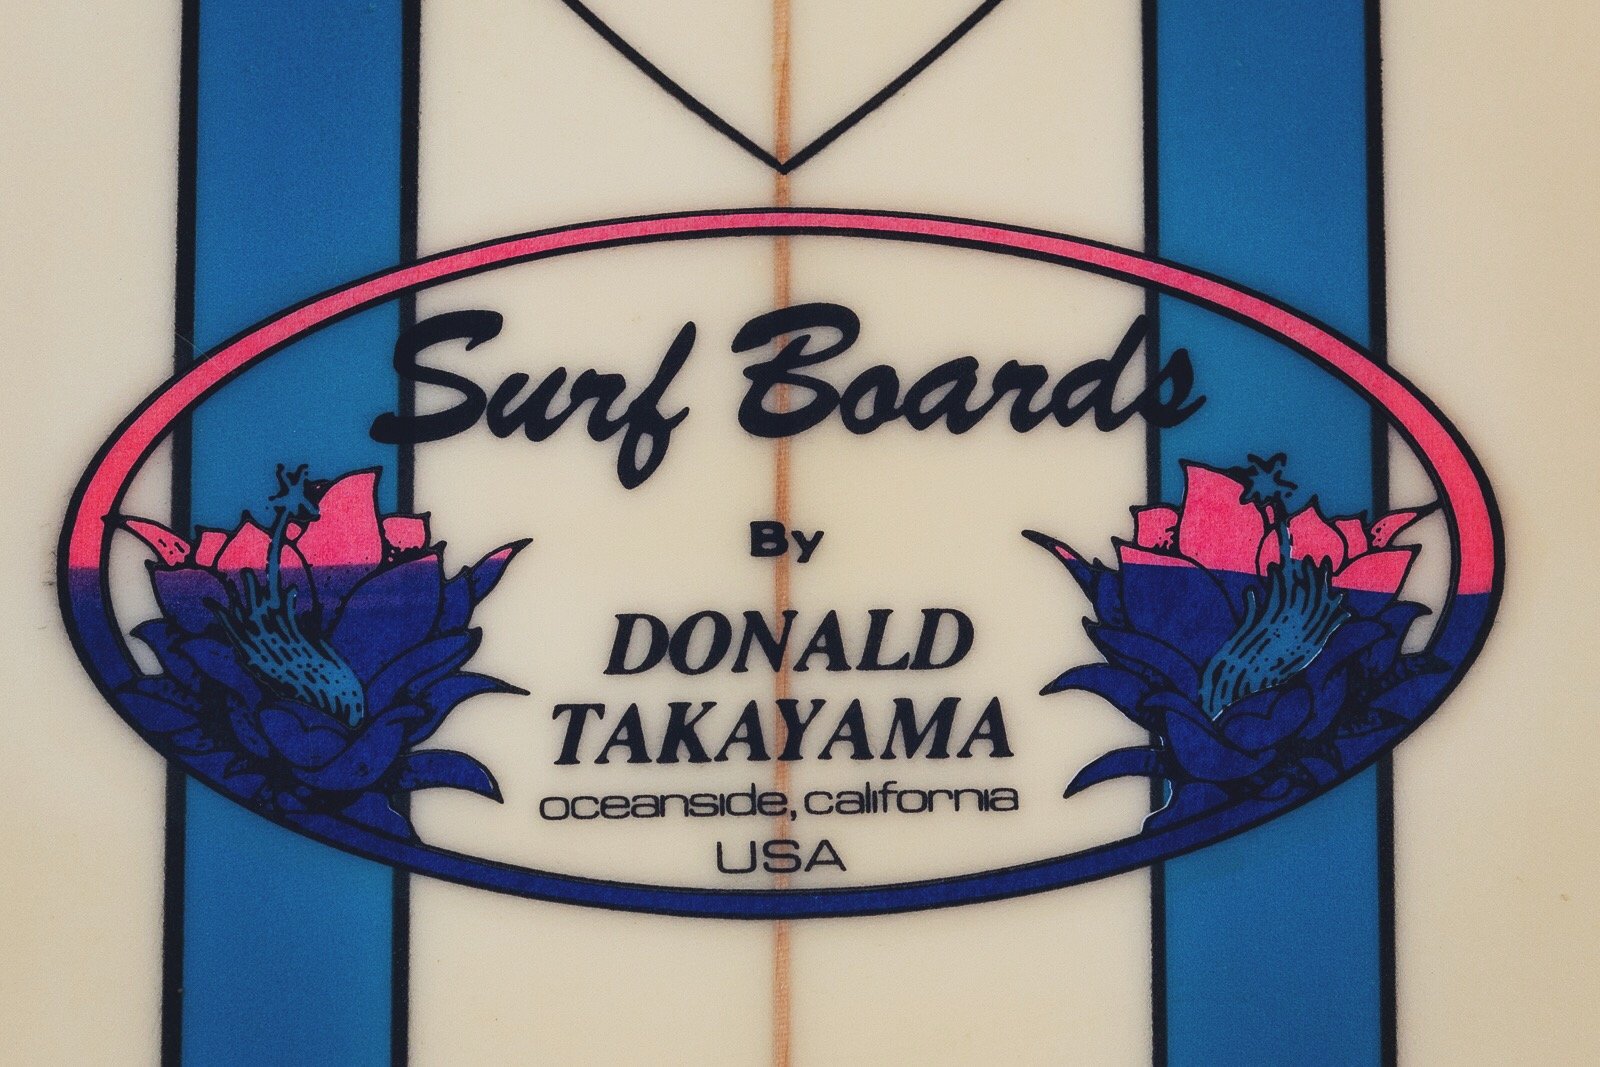  Surfboards by Donald Takayama logo 